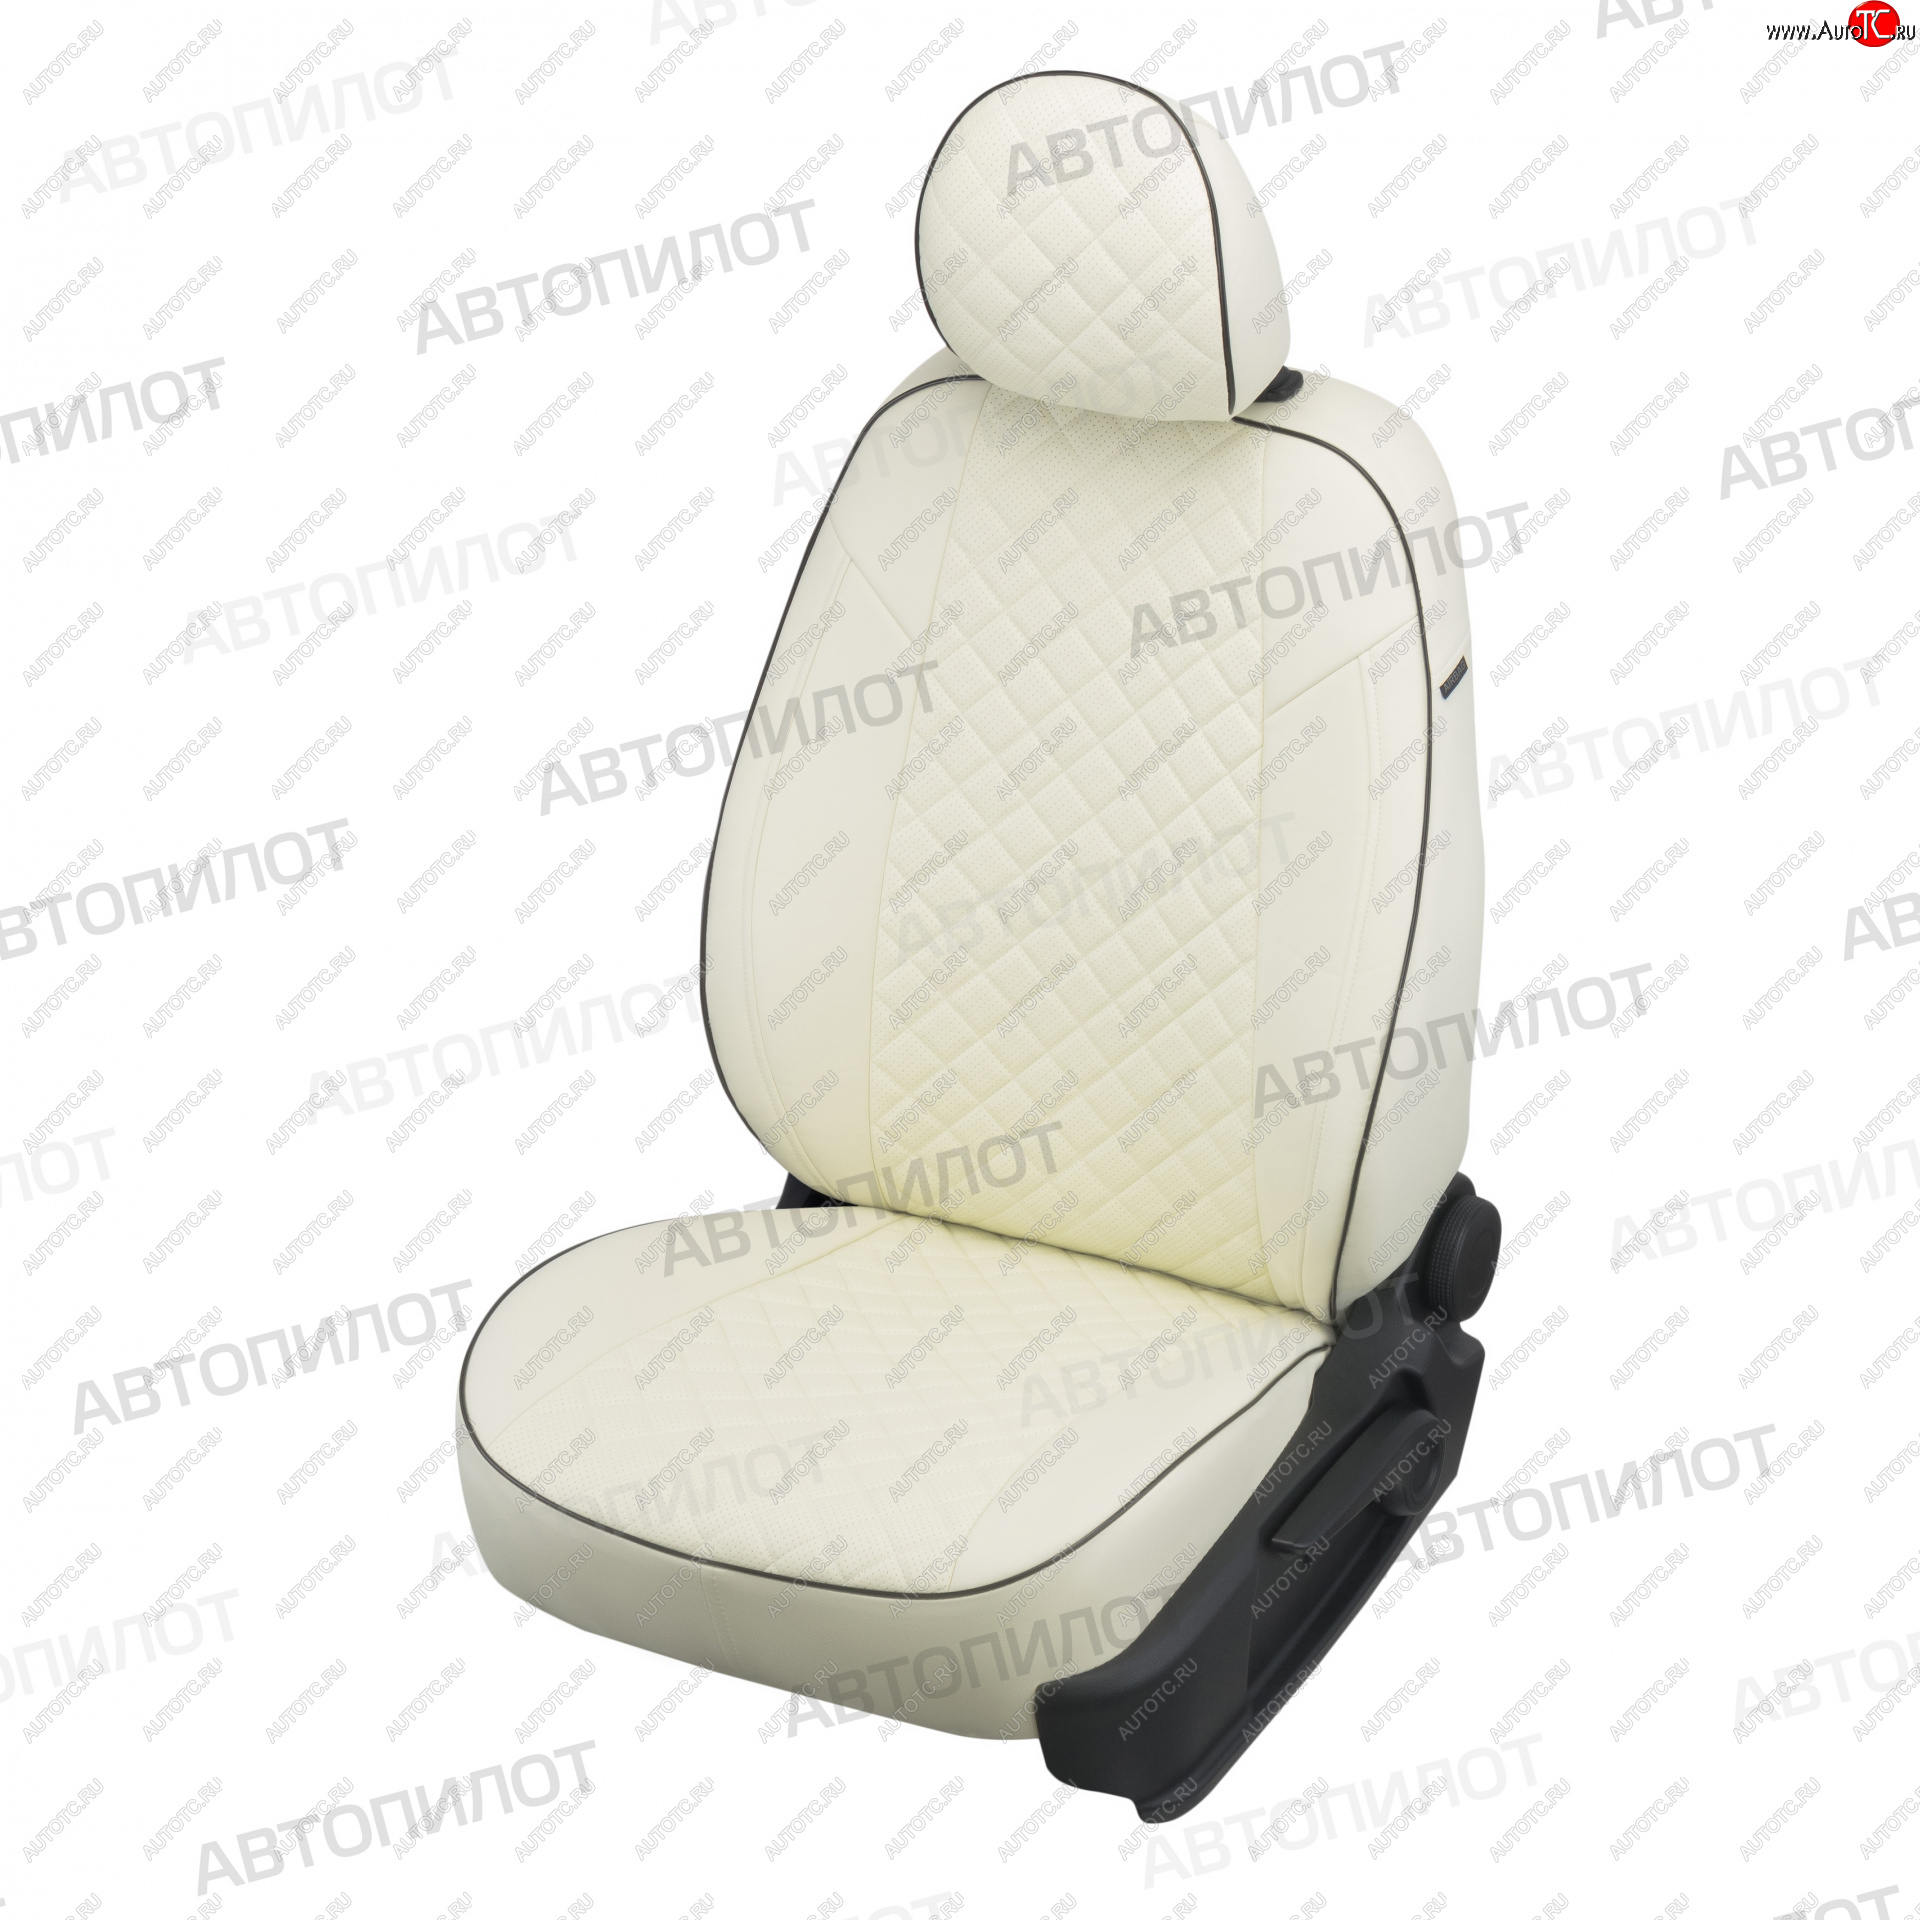 13 999 р. Чехлы сидений (экокожа) Автопилот Ромб  KIA Soul  2 PS (2014-2019) (белый)